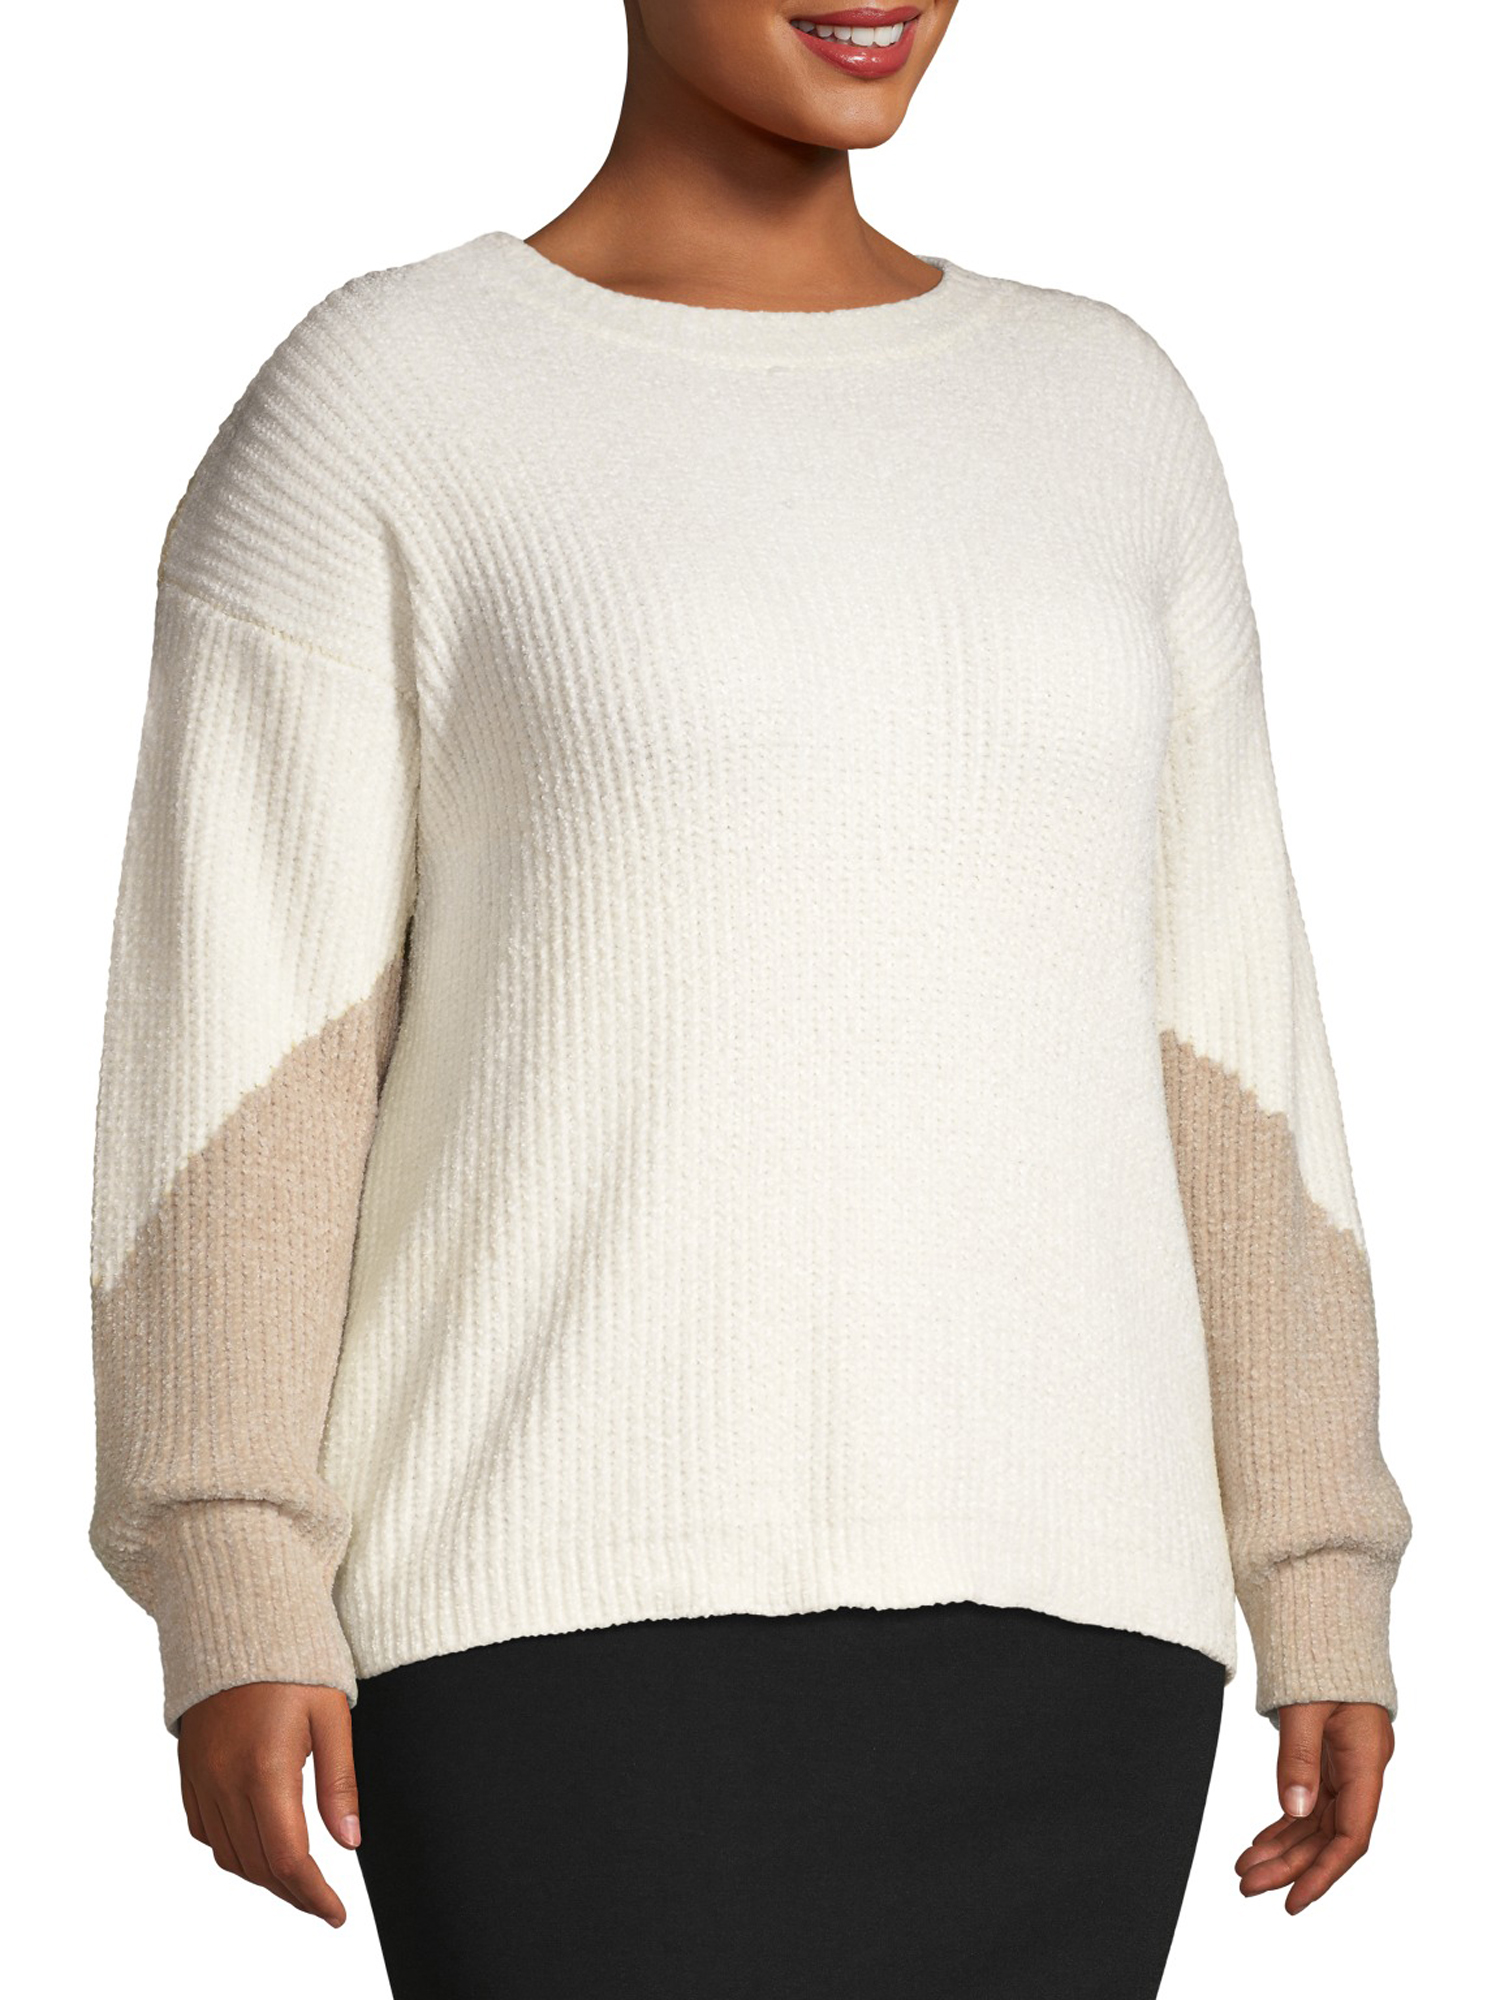 Heart & Crush Women's Plus Size Chenille Color Block Pullover - image 2 of 7